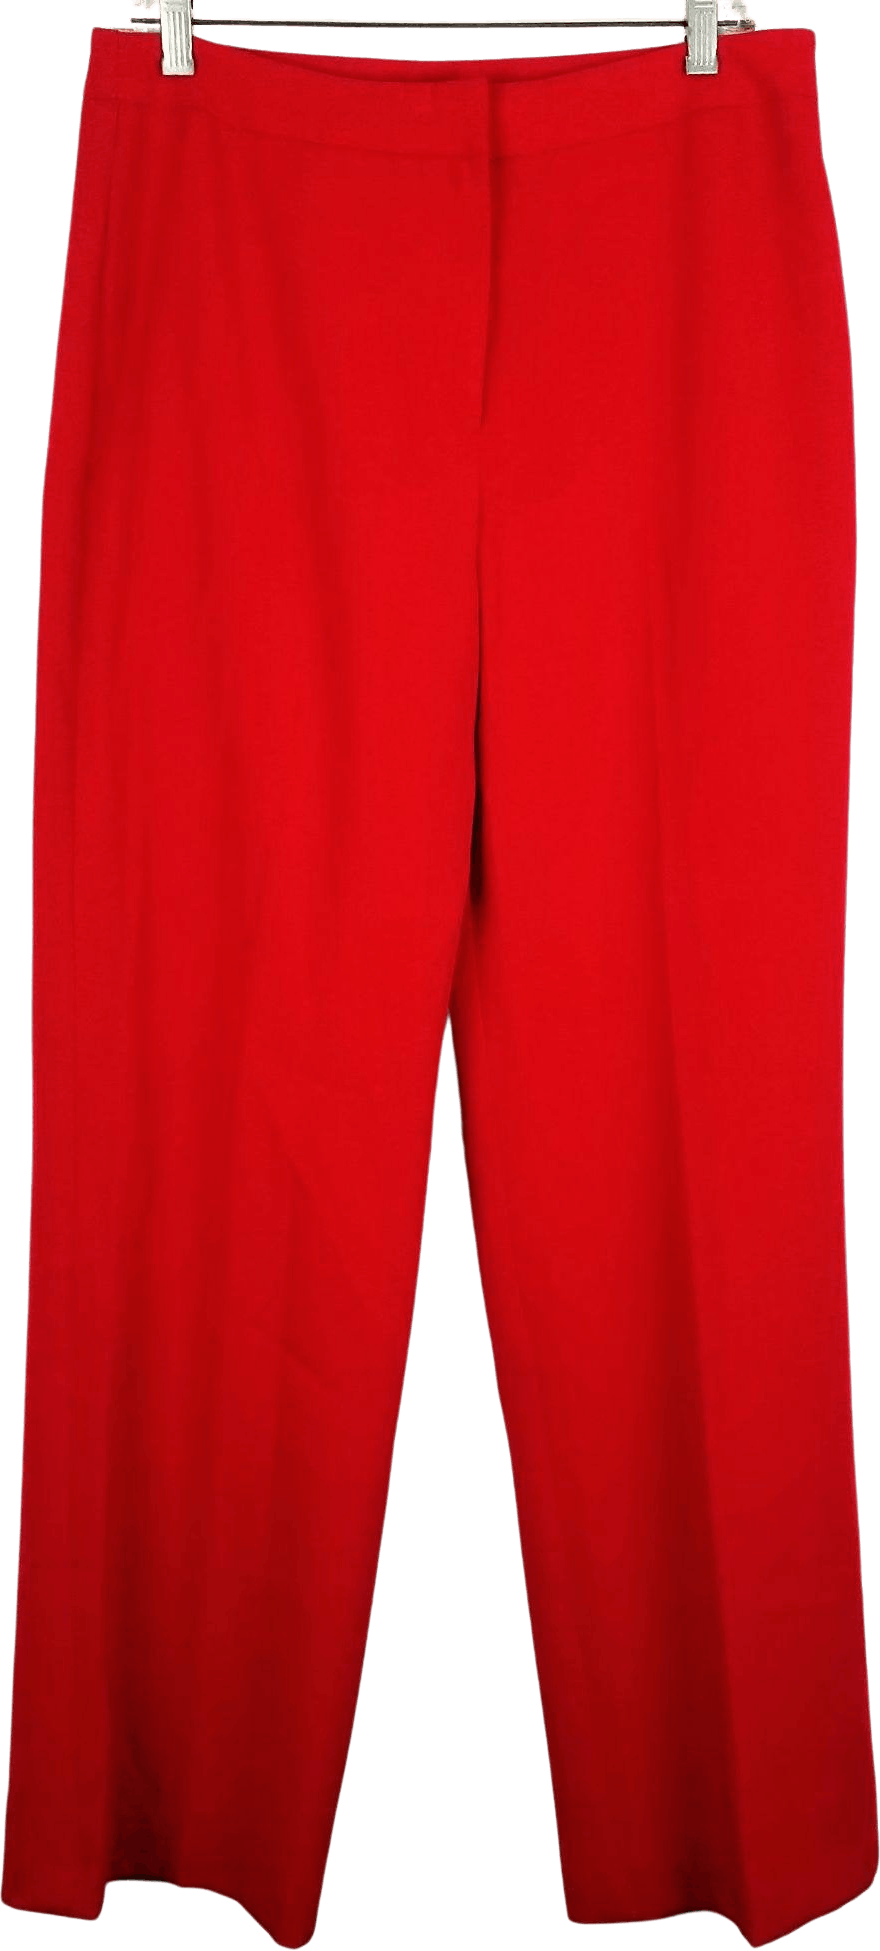 Vintage 80's/90's Flowy High Waisted Red Slacks | Shop THRILLING